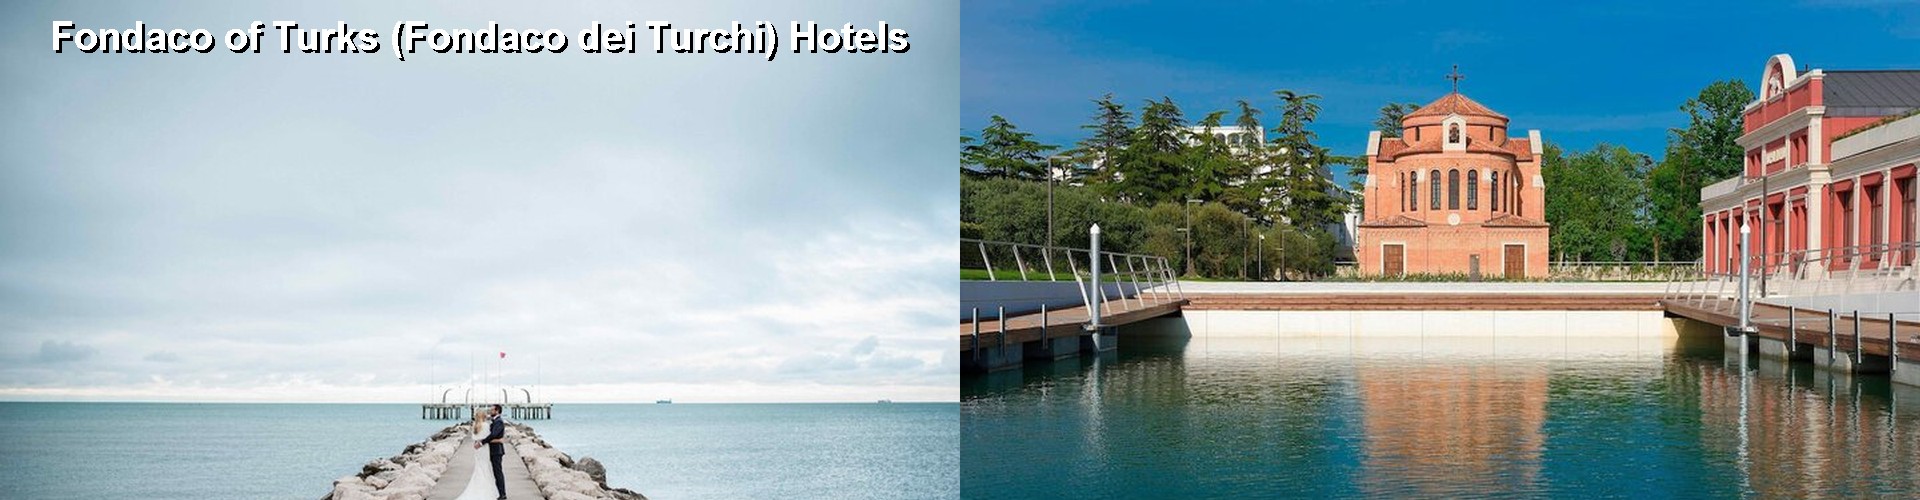 5 Best Hotels near Fondaco of Turks (Fondaco dei Turchi)